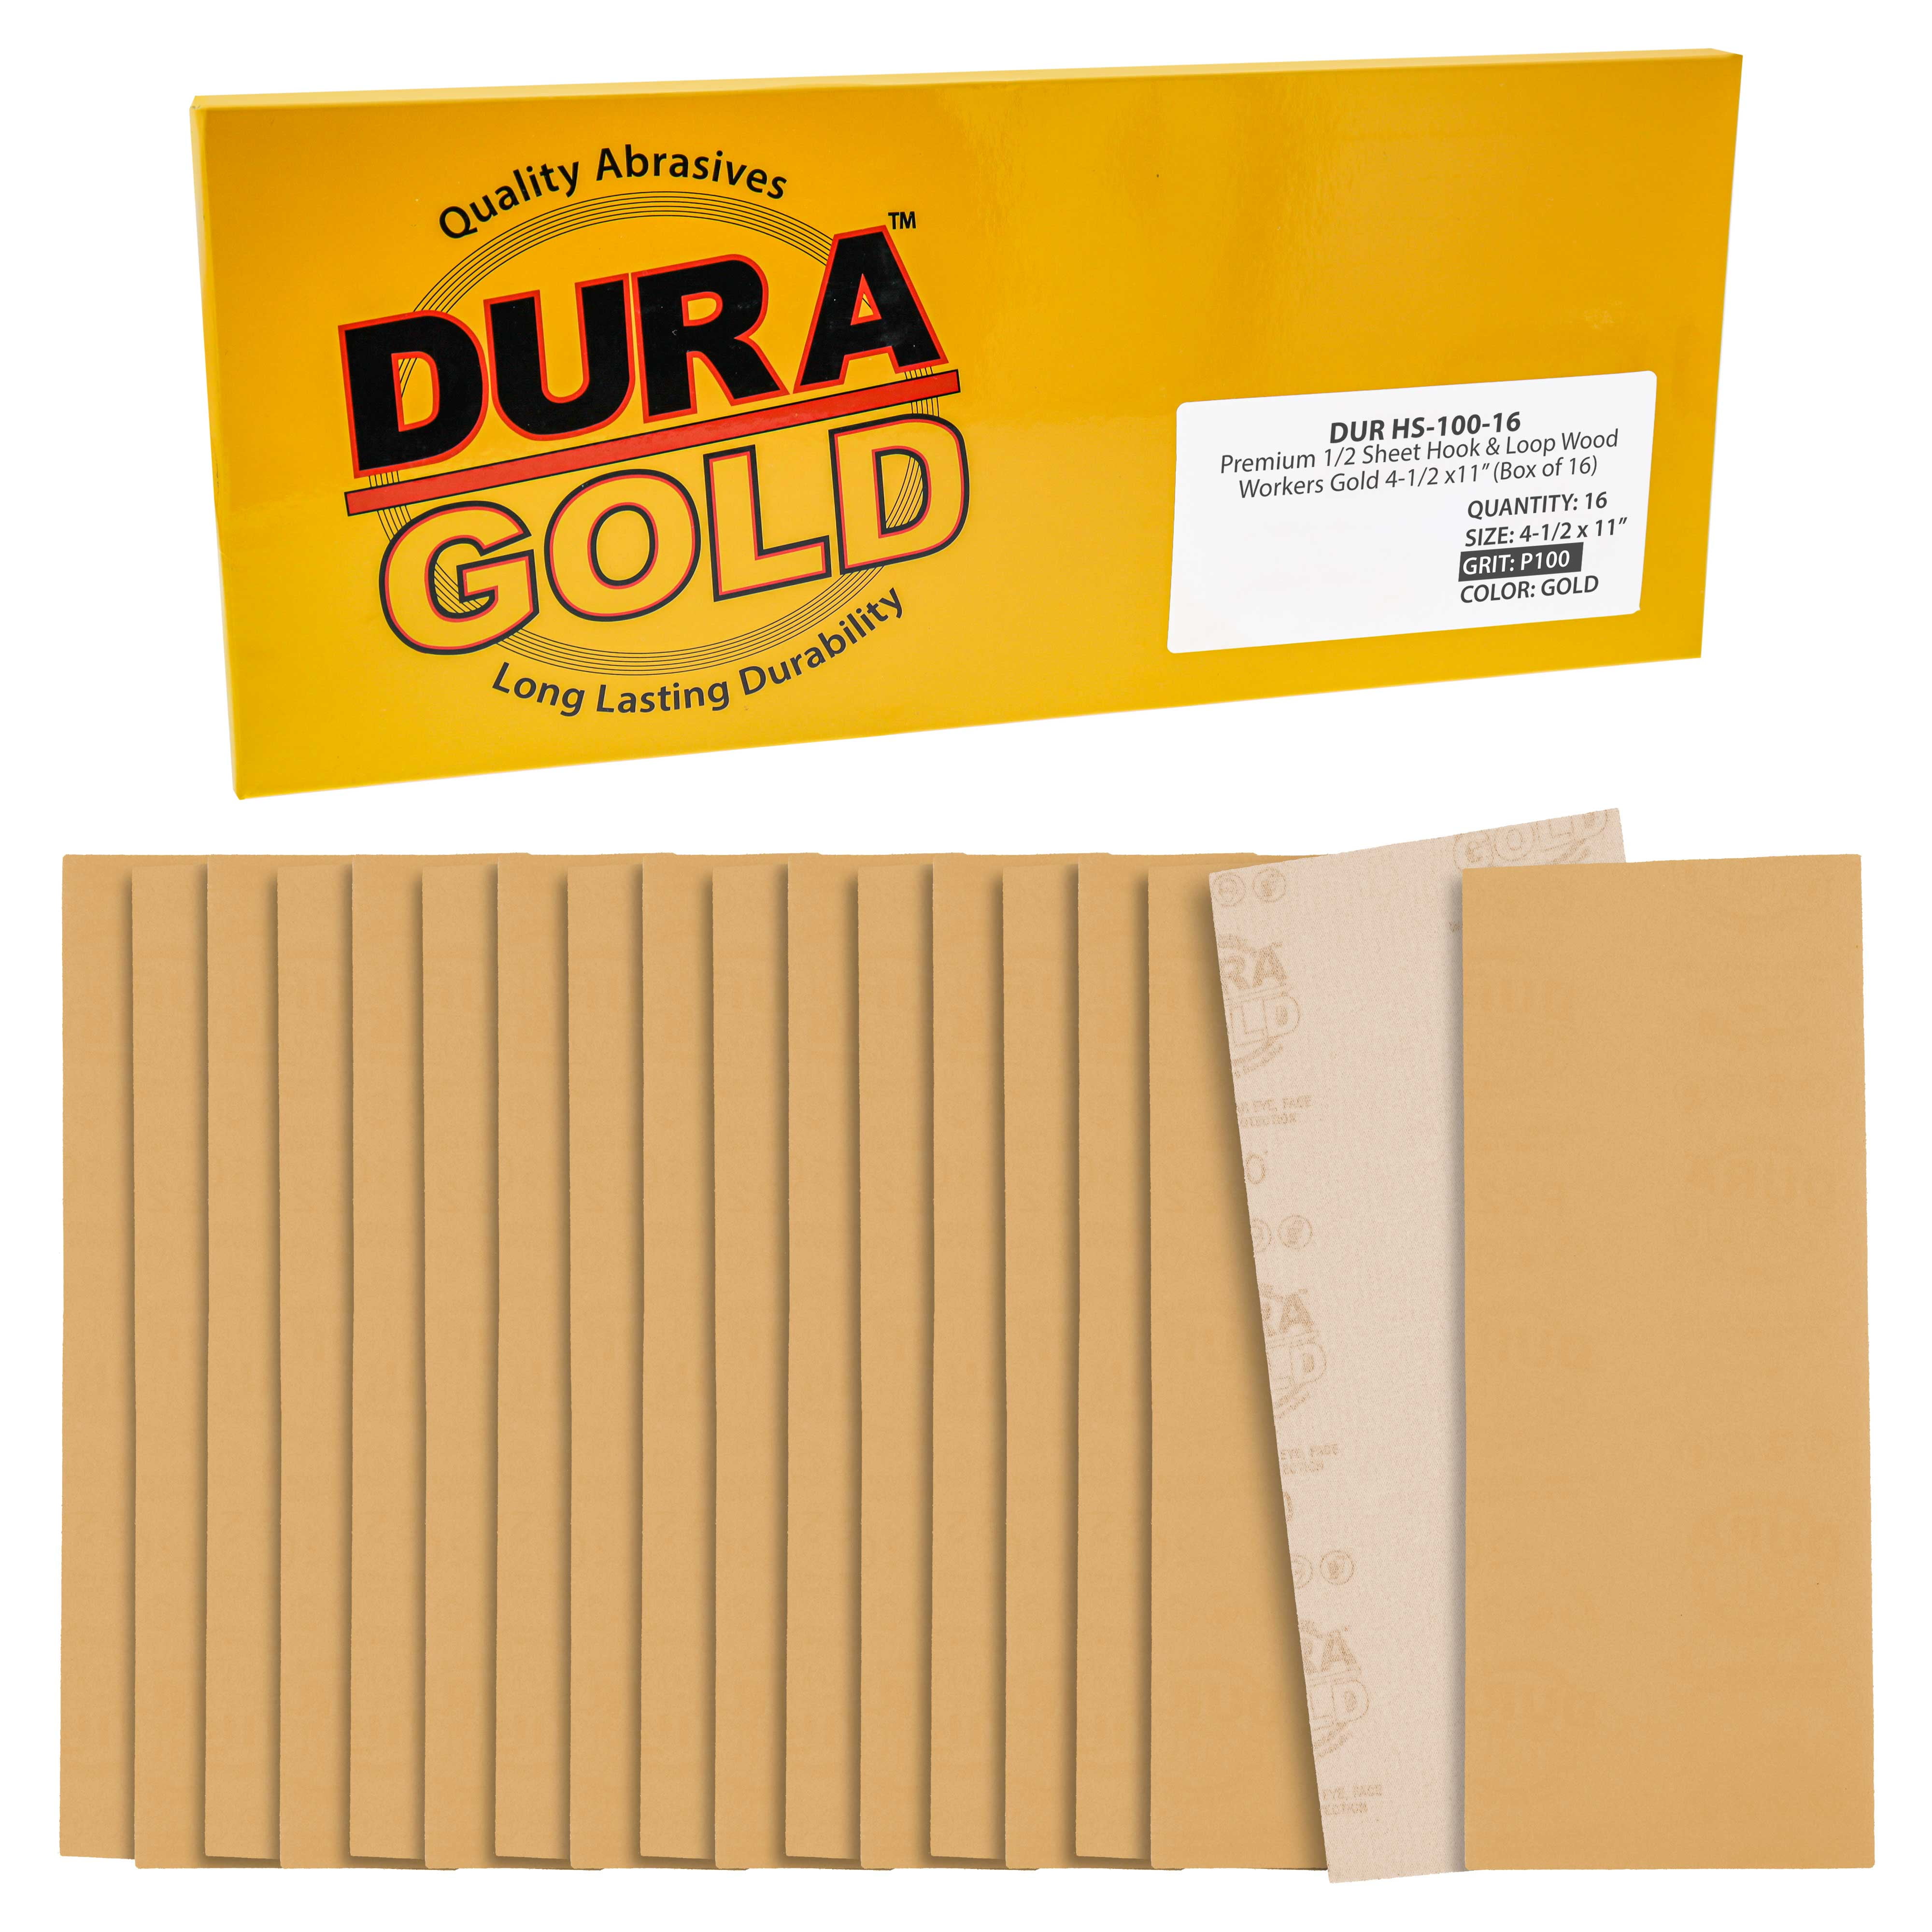 Dura-Gold Premium 80, 150, 220, 320, 400 Grit 6 Gold PSA Sanding Discs, 10  Each, 50 Total - Self Adhesive Stickyback Sandpaper Discs for DA Sander